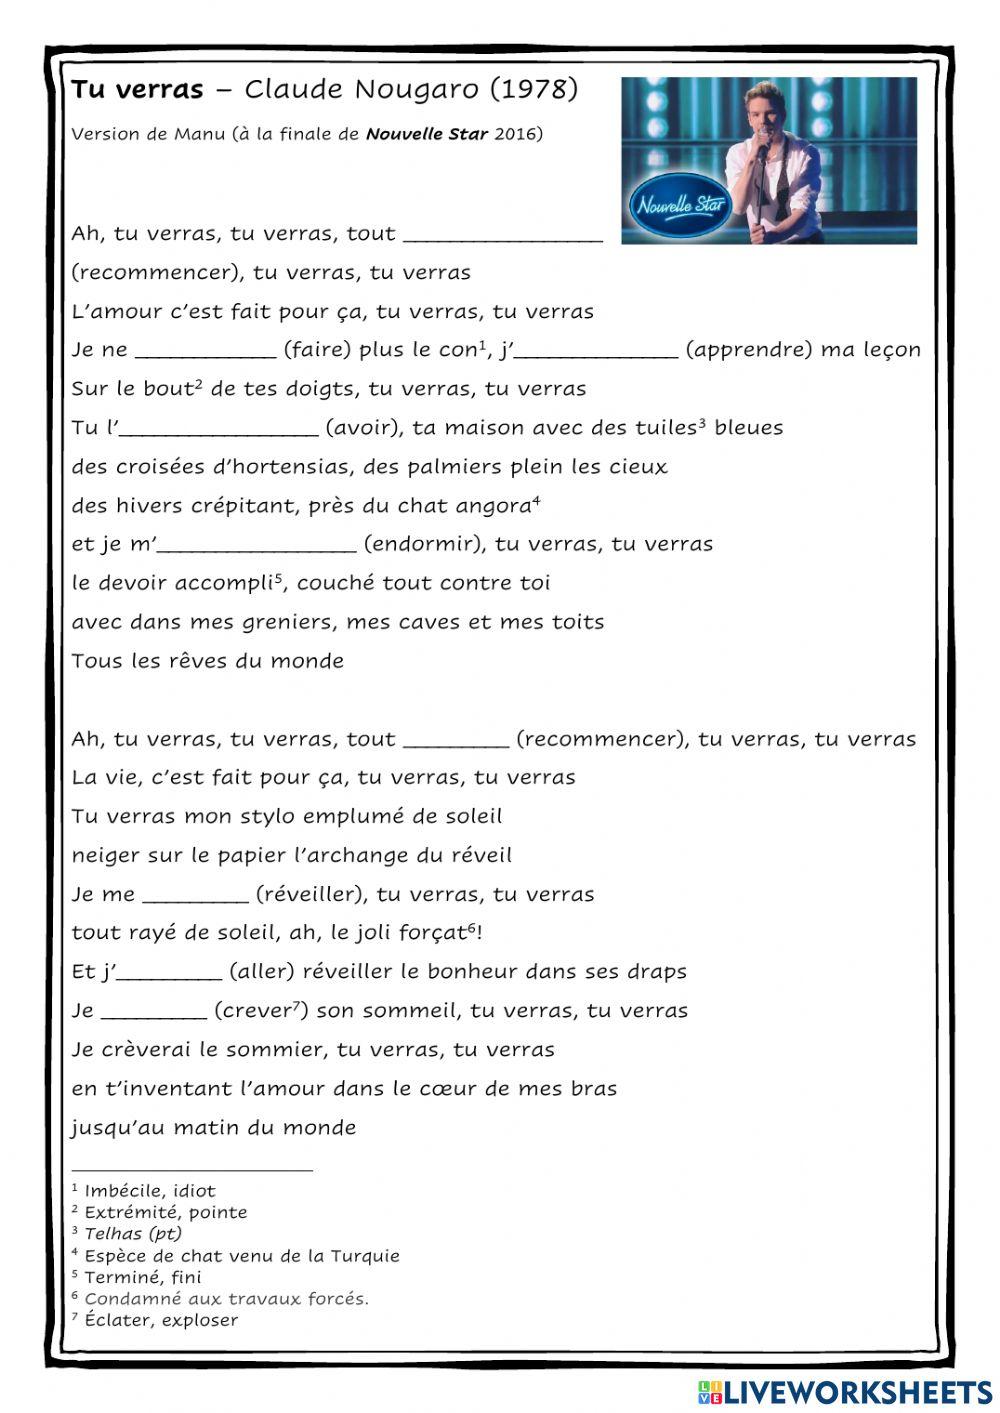 Tu verras – Claude Nougaro (1978) online exercise for | Live Worksheets